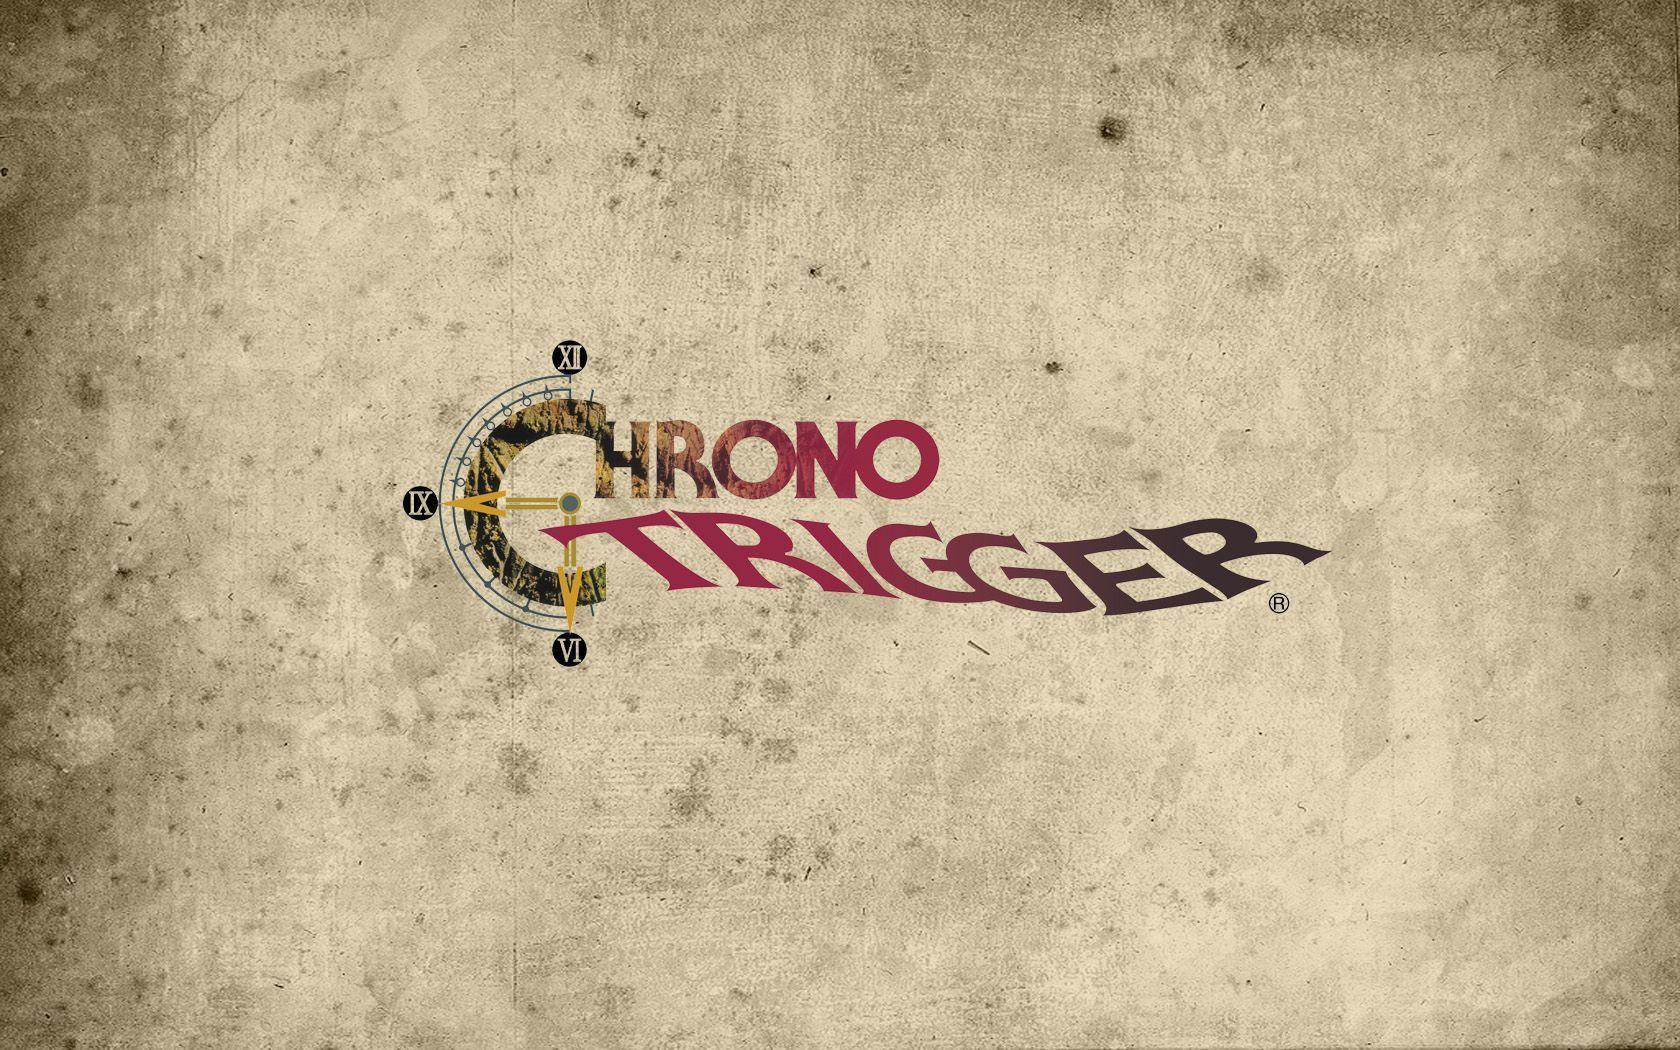 Chrono Trigger Wallpaper